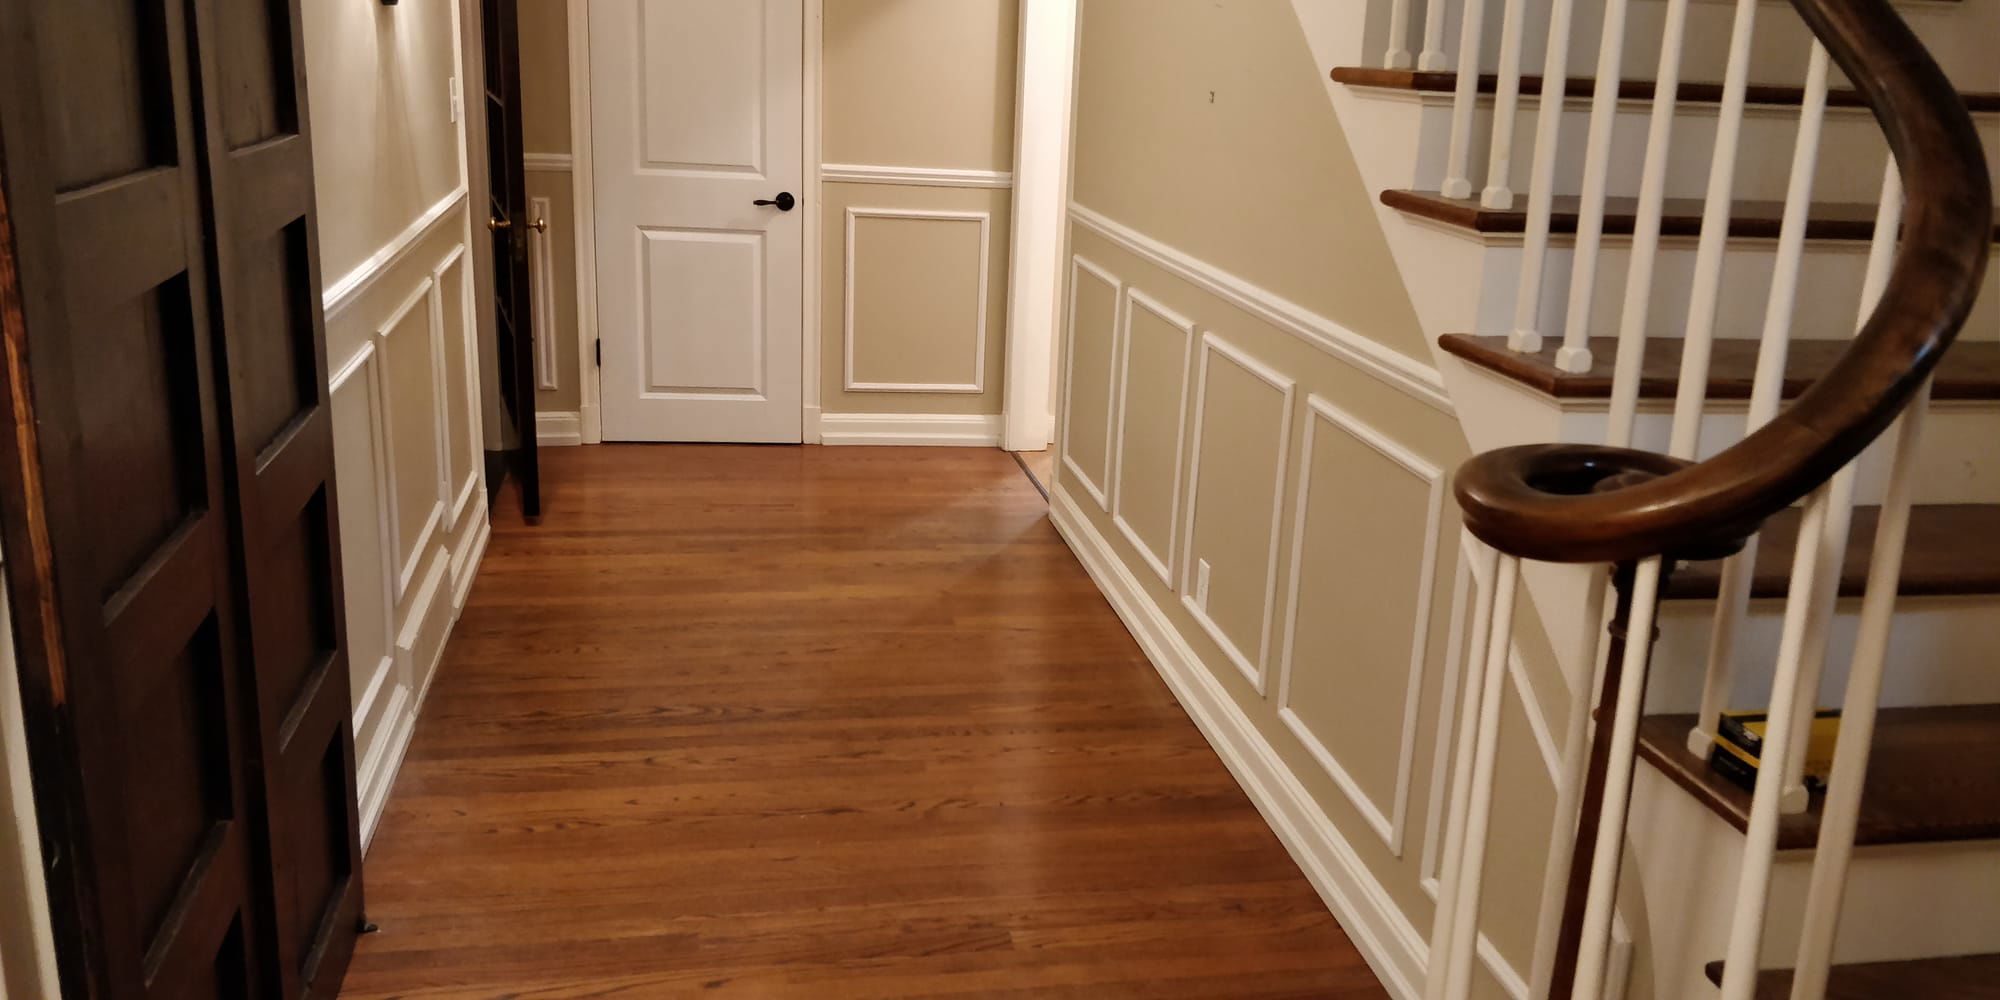 Hallway trim